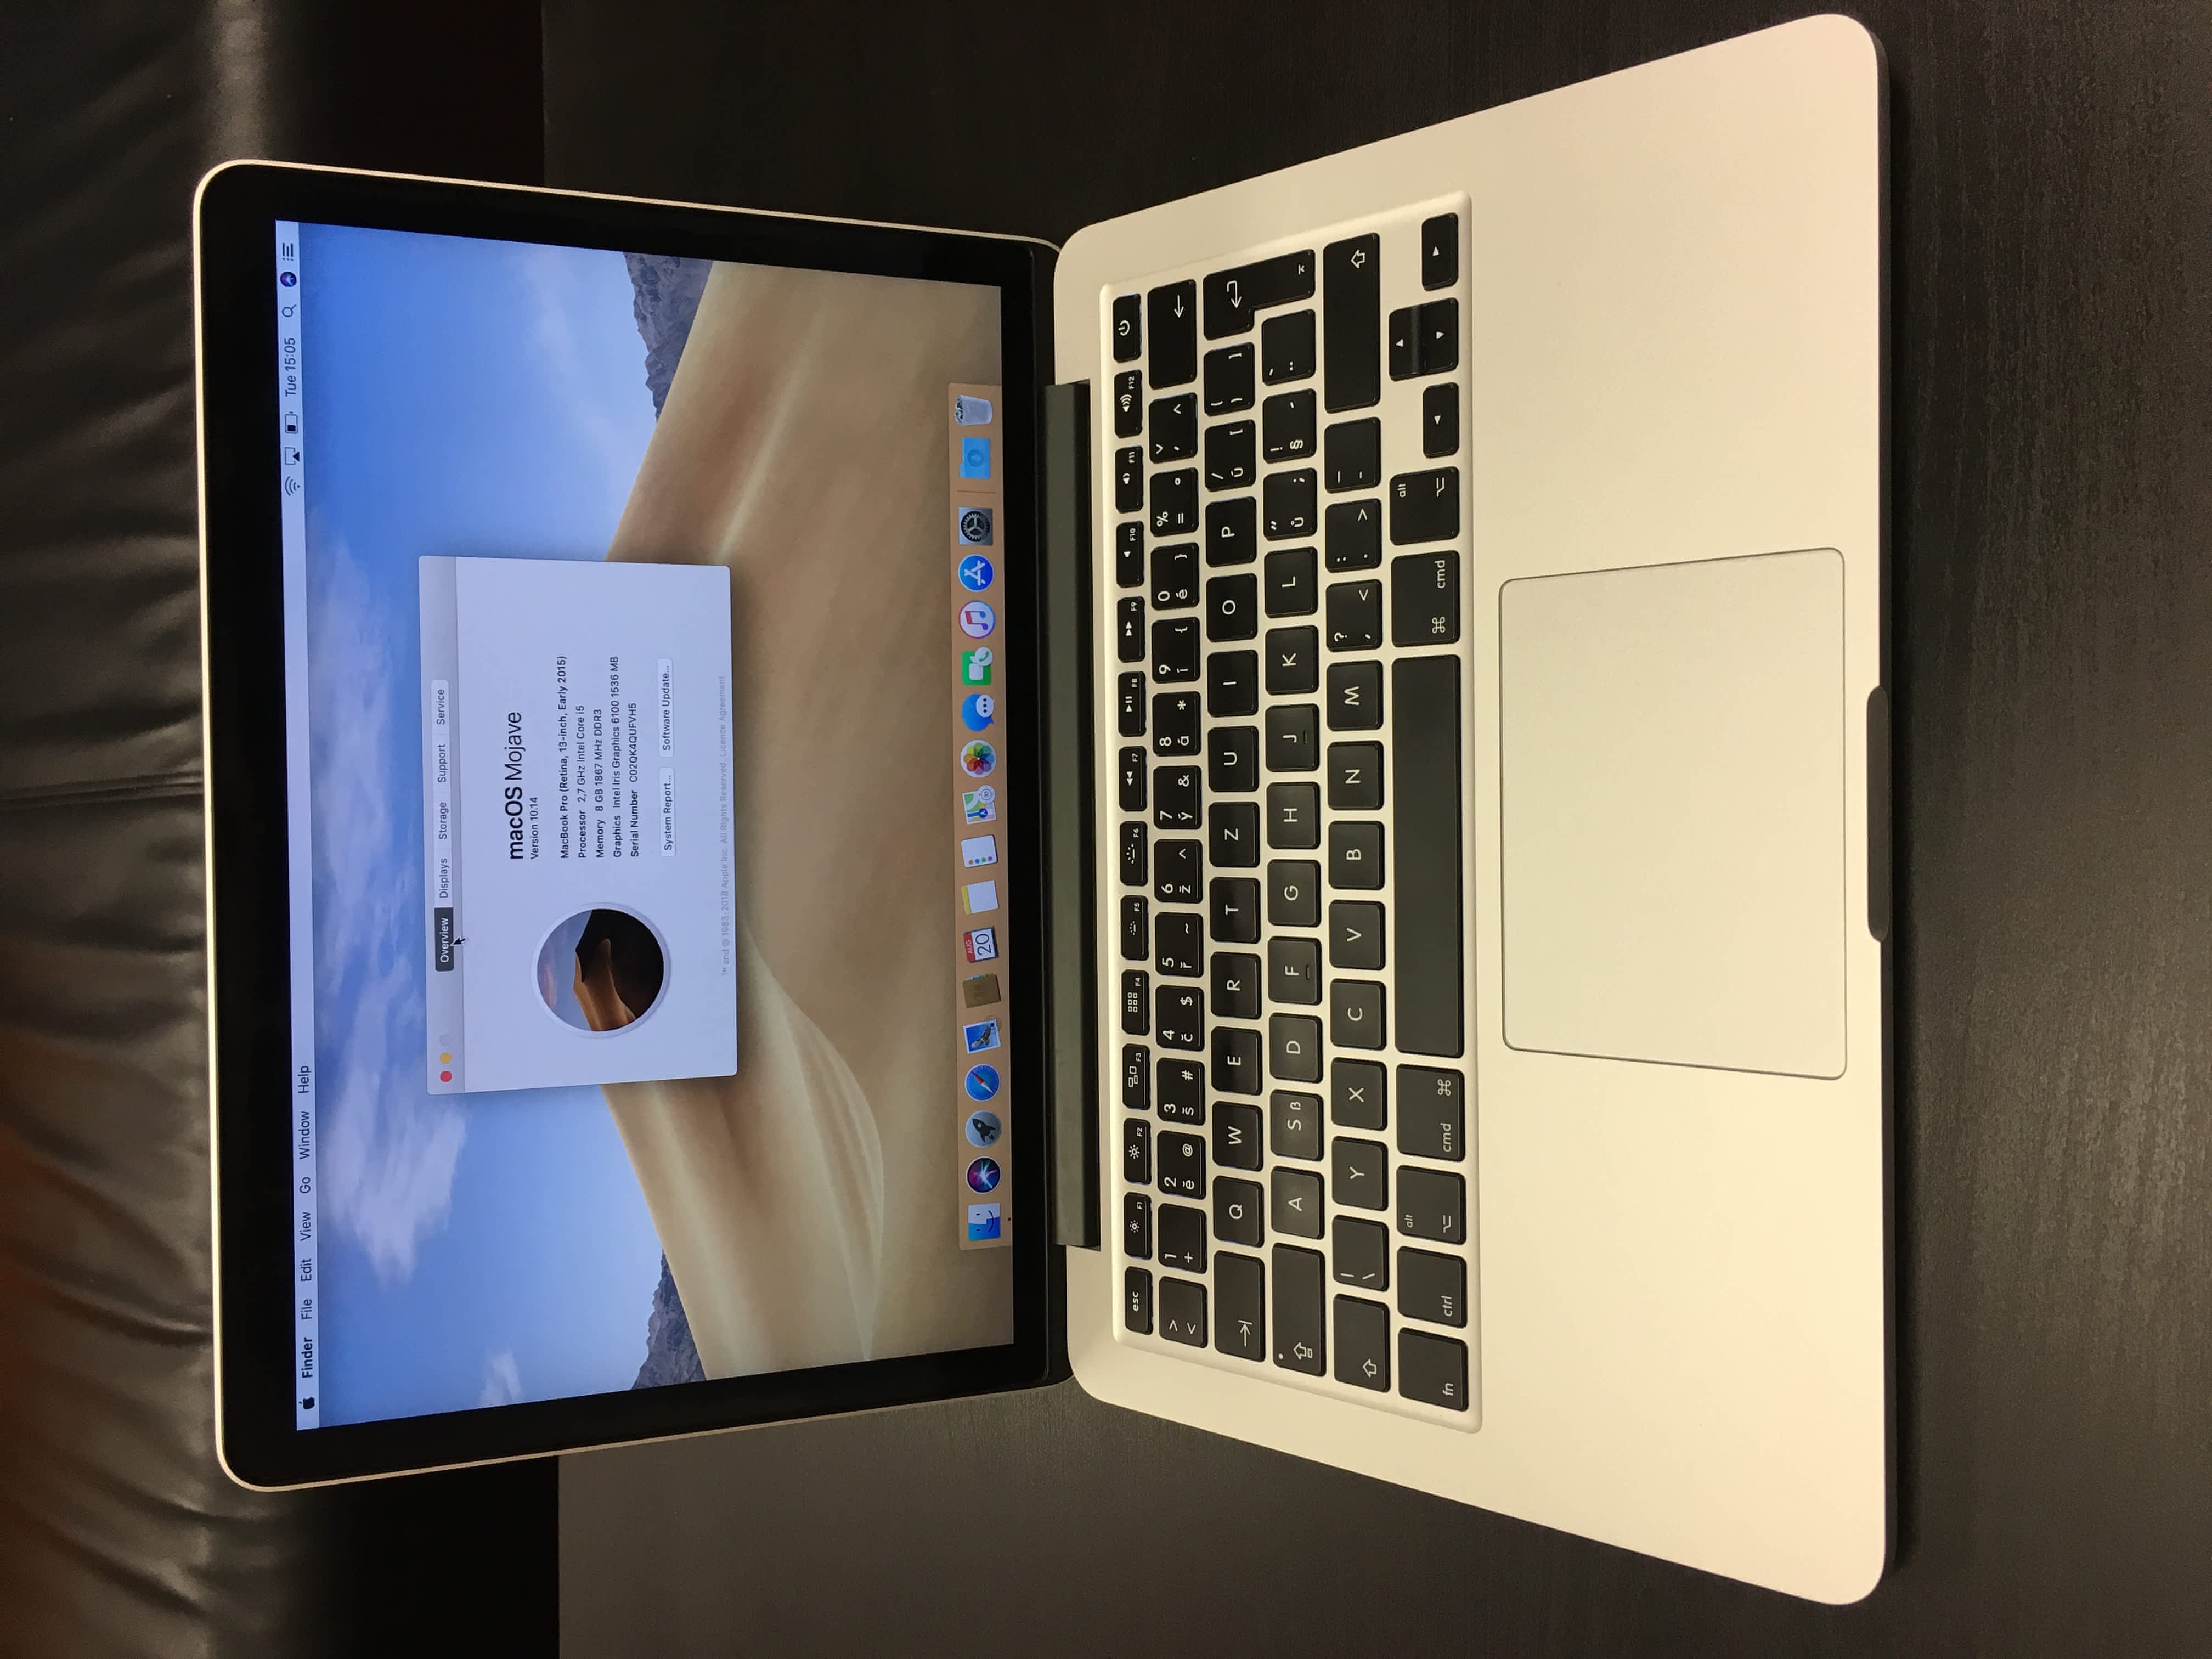 macbook pro retina 13 inch early 2015